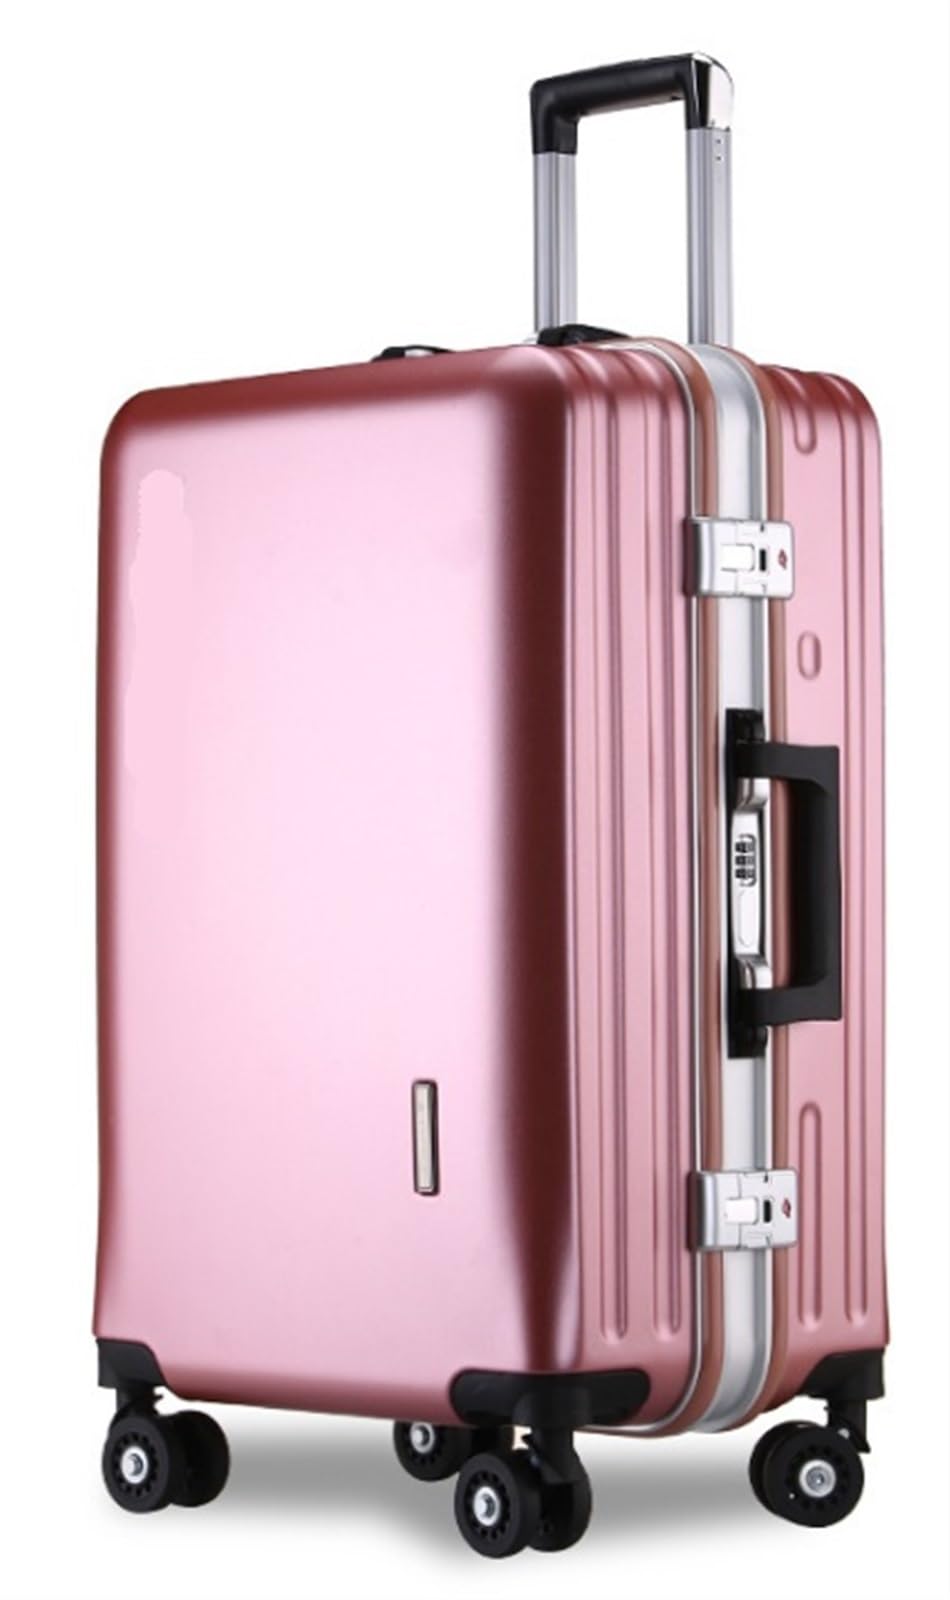 LJKSHNCX Handgepäck-Koffer, Koffer, Aluminiumrahmen, wiederaufladbares Gepäck, Hartschalen-Koffer mit Rollen, Handgepäck-Koffer, Handgepäck